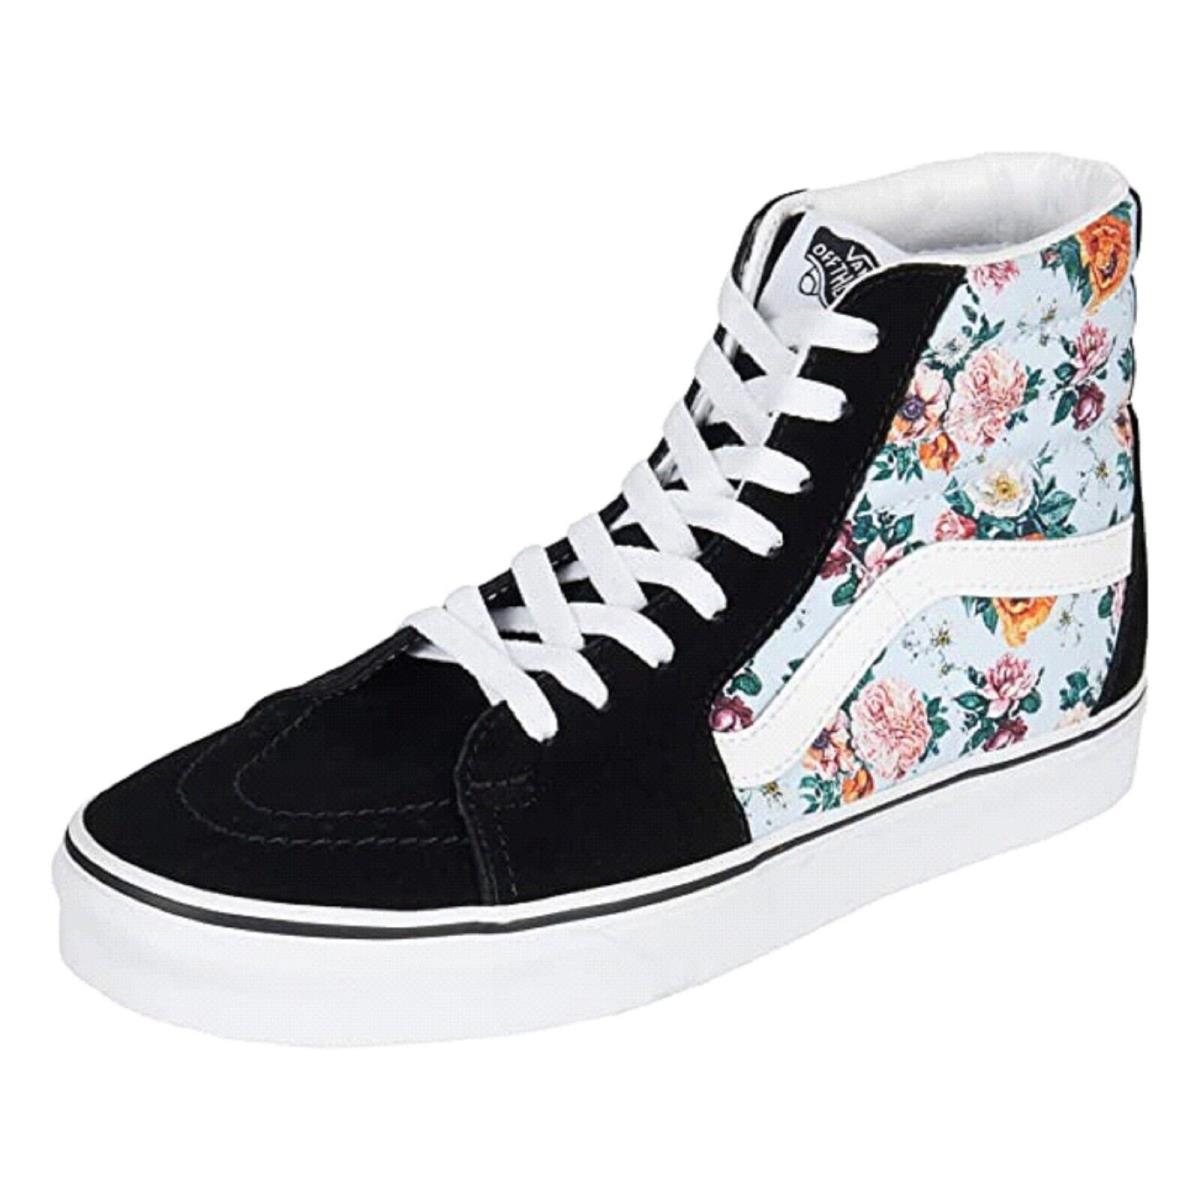 Vans Sk8-Hi Unisex Adult Sneaker (Garden Floral) True White